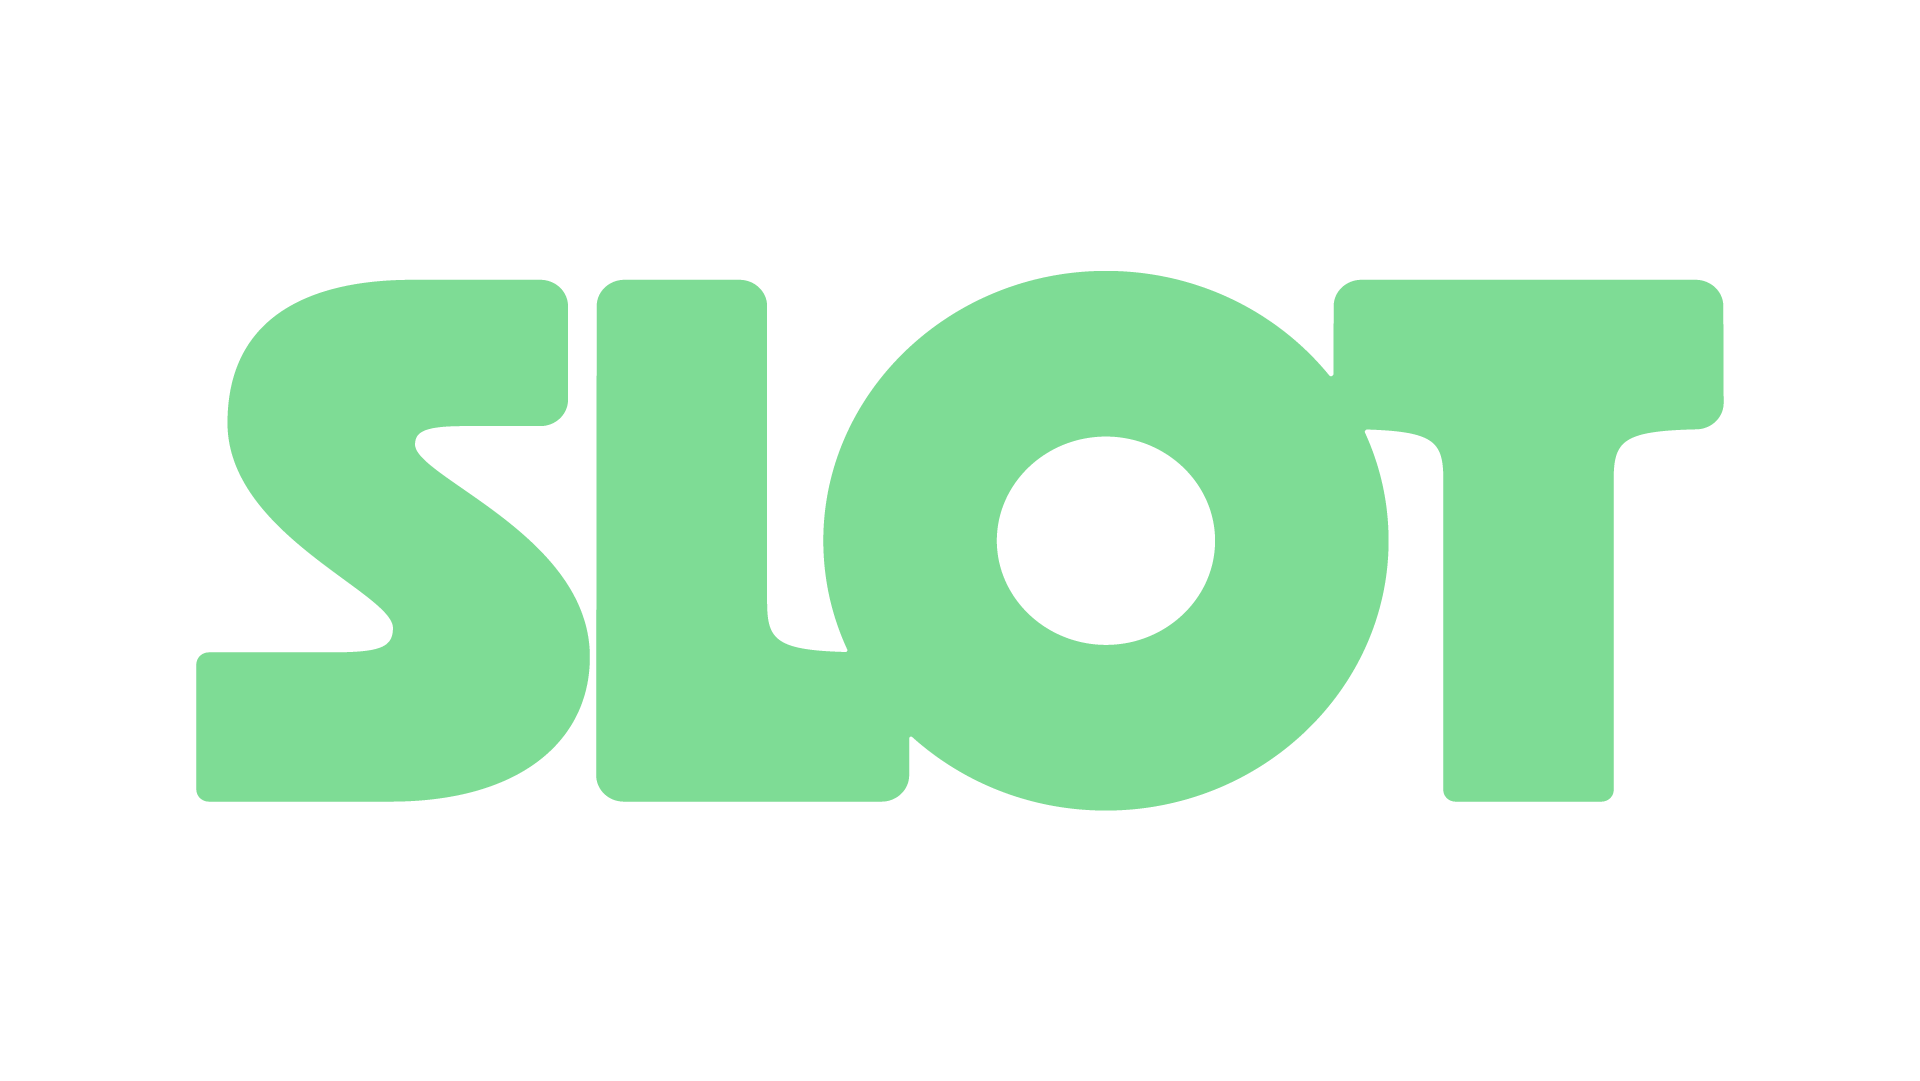 SLOT logo